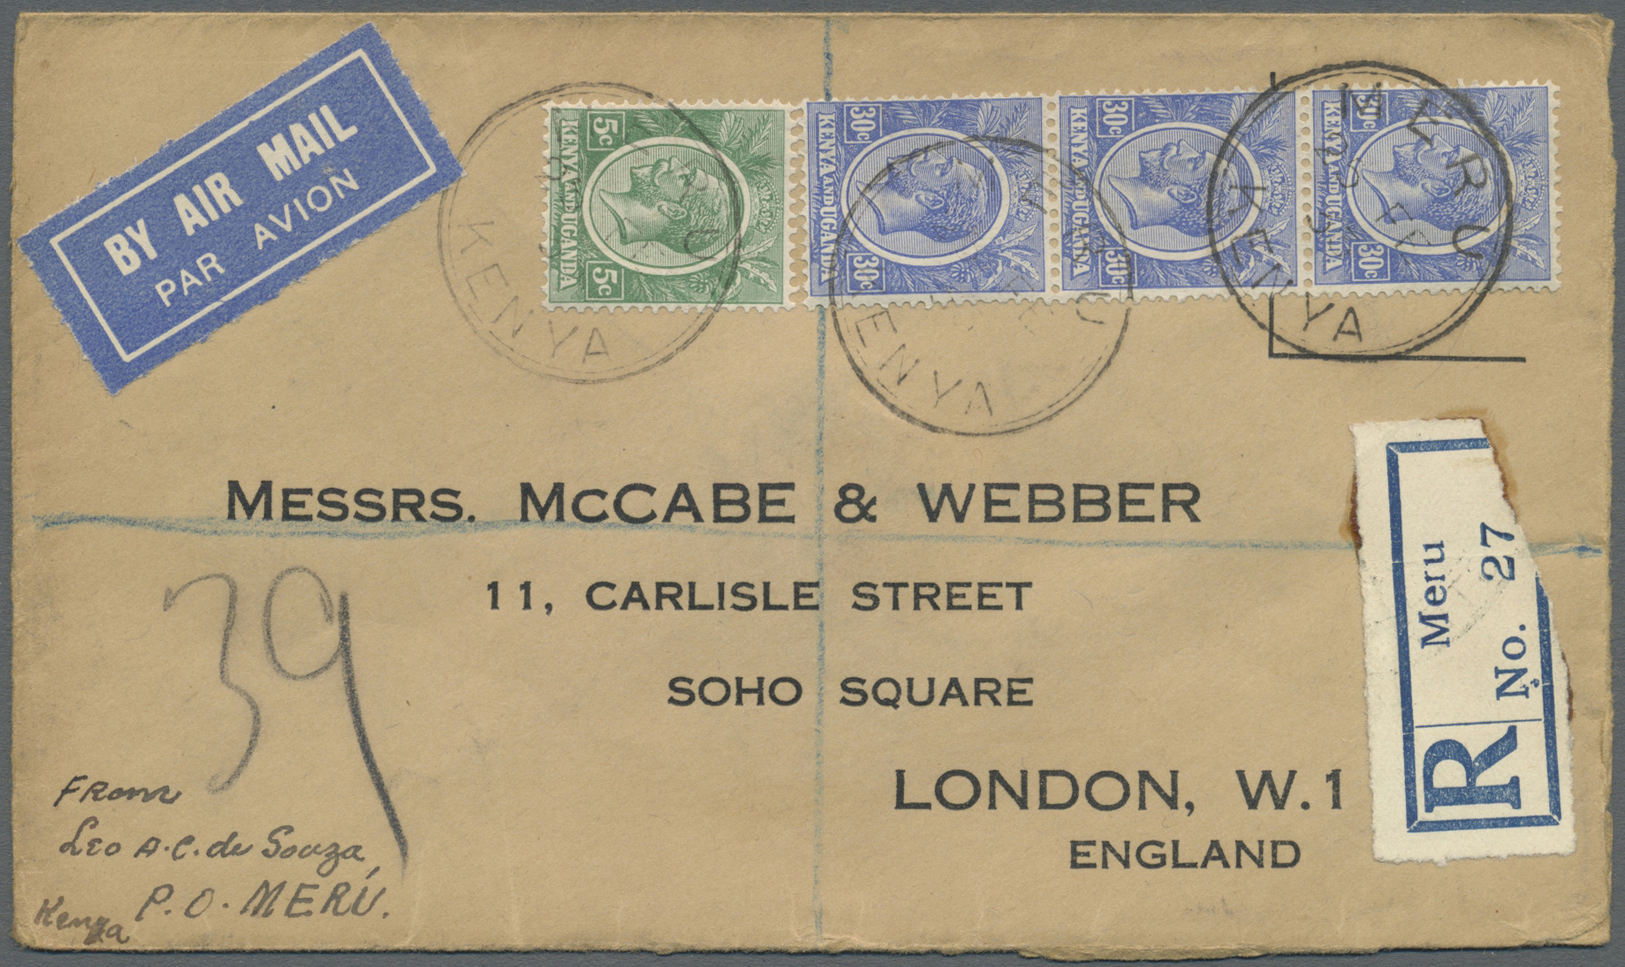 Br Kenia - Britisch Ostafrika: 1933. Registered Air Mail Envelope Addressed To London Bearing SG 78, 5c Green And SG 84, - British East Africa